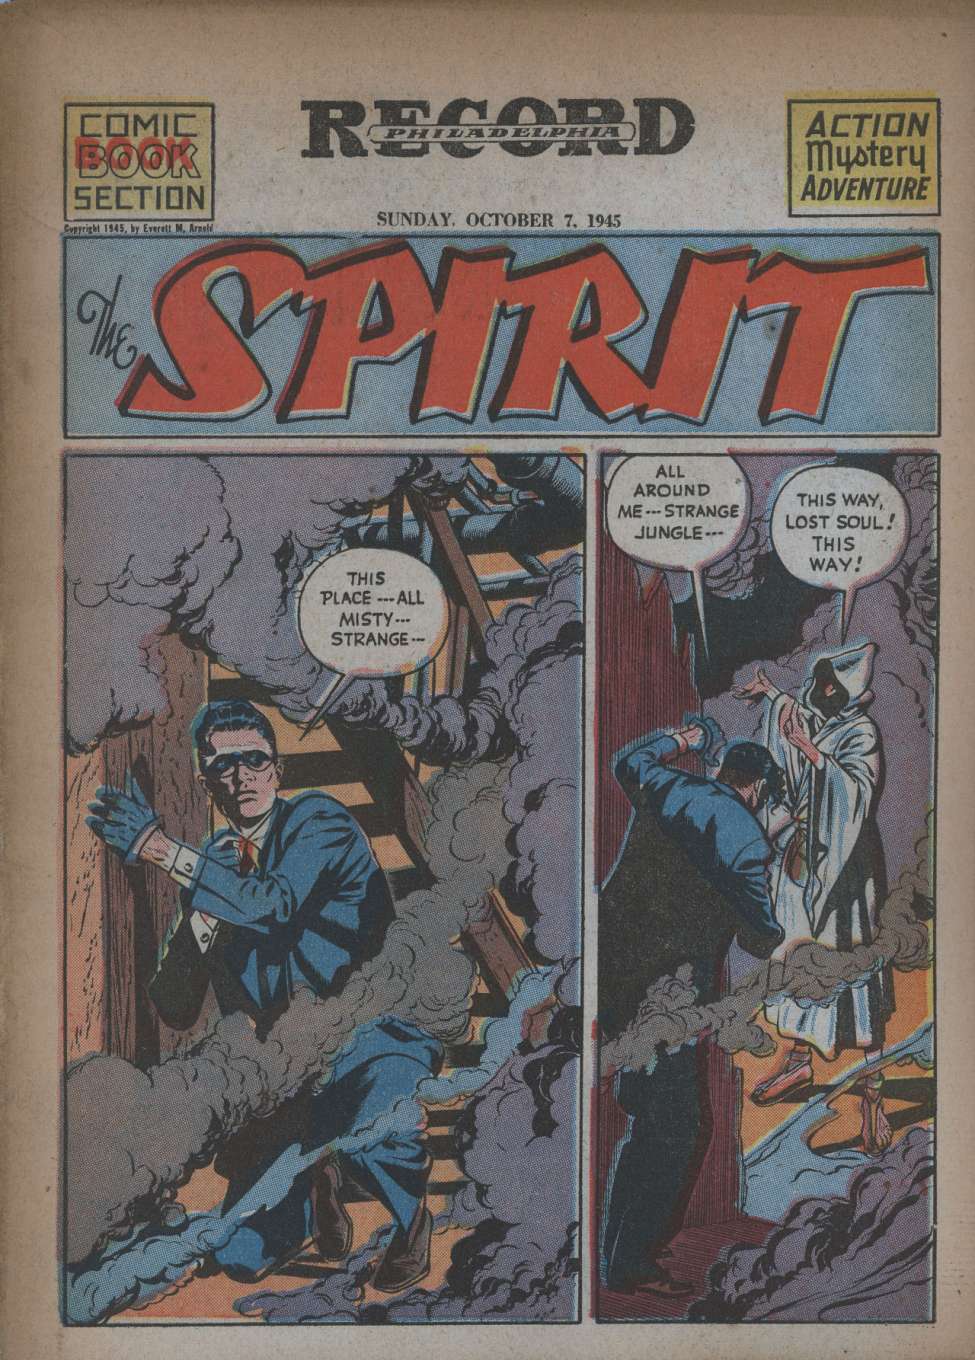 Comic Book Cover For The Spirit (1945-10-07) - Philadelphia Record